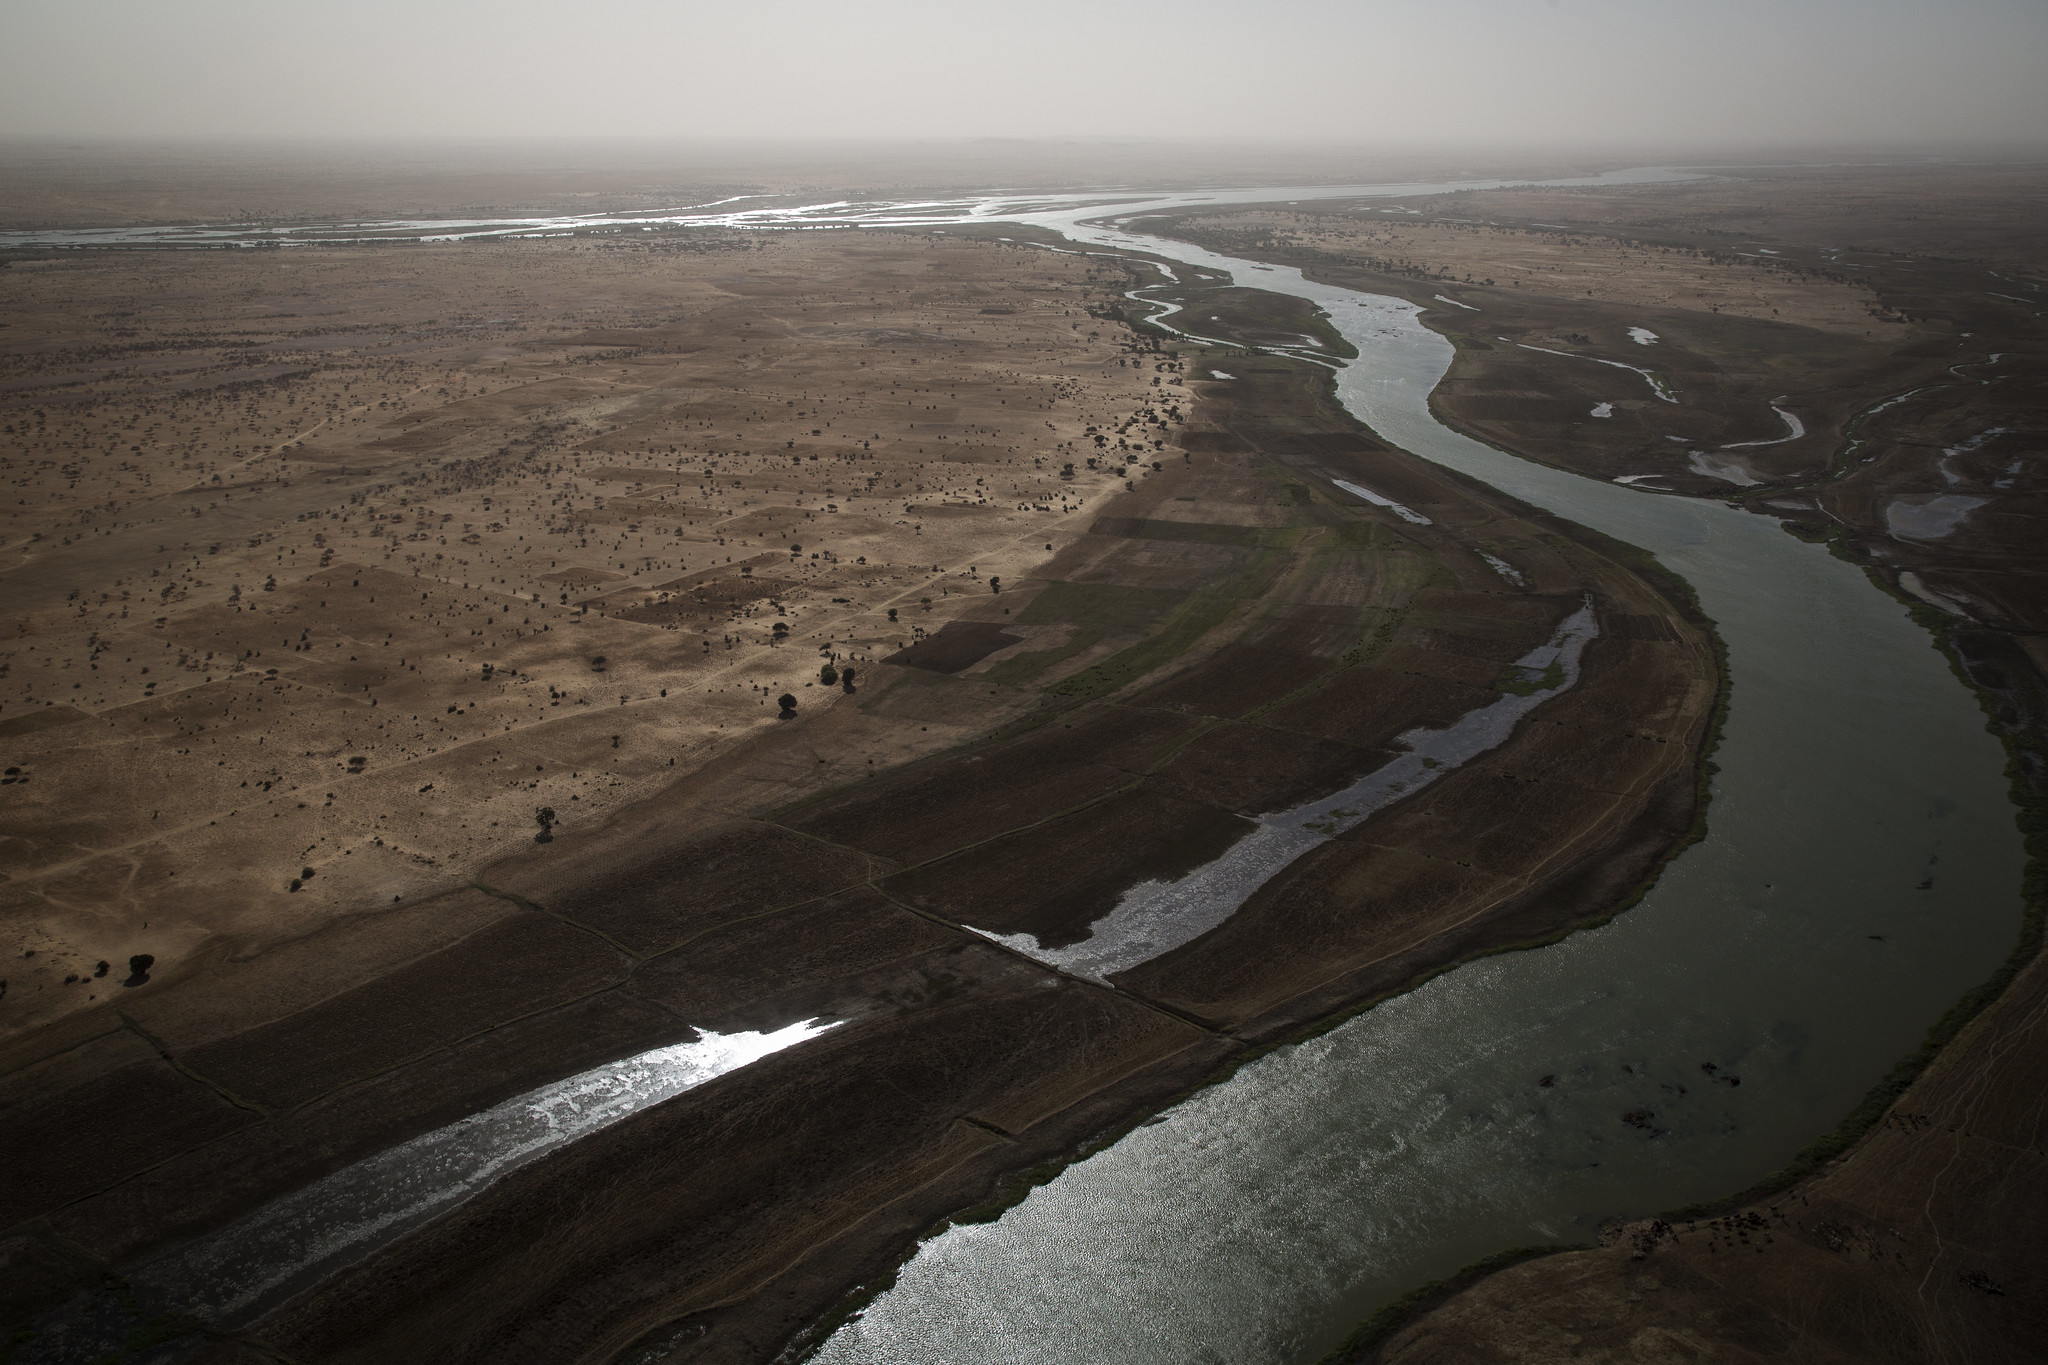 Day 2 Mopti/ Niger River